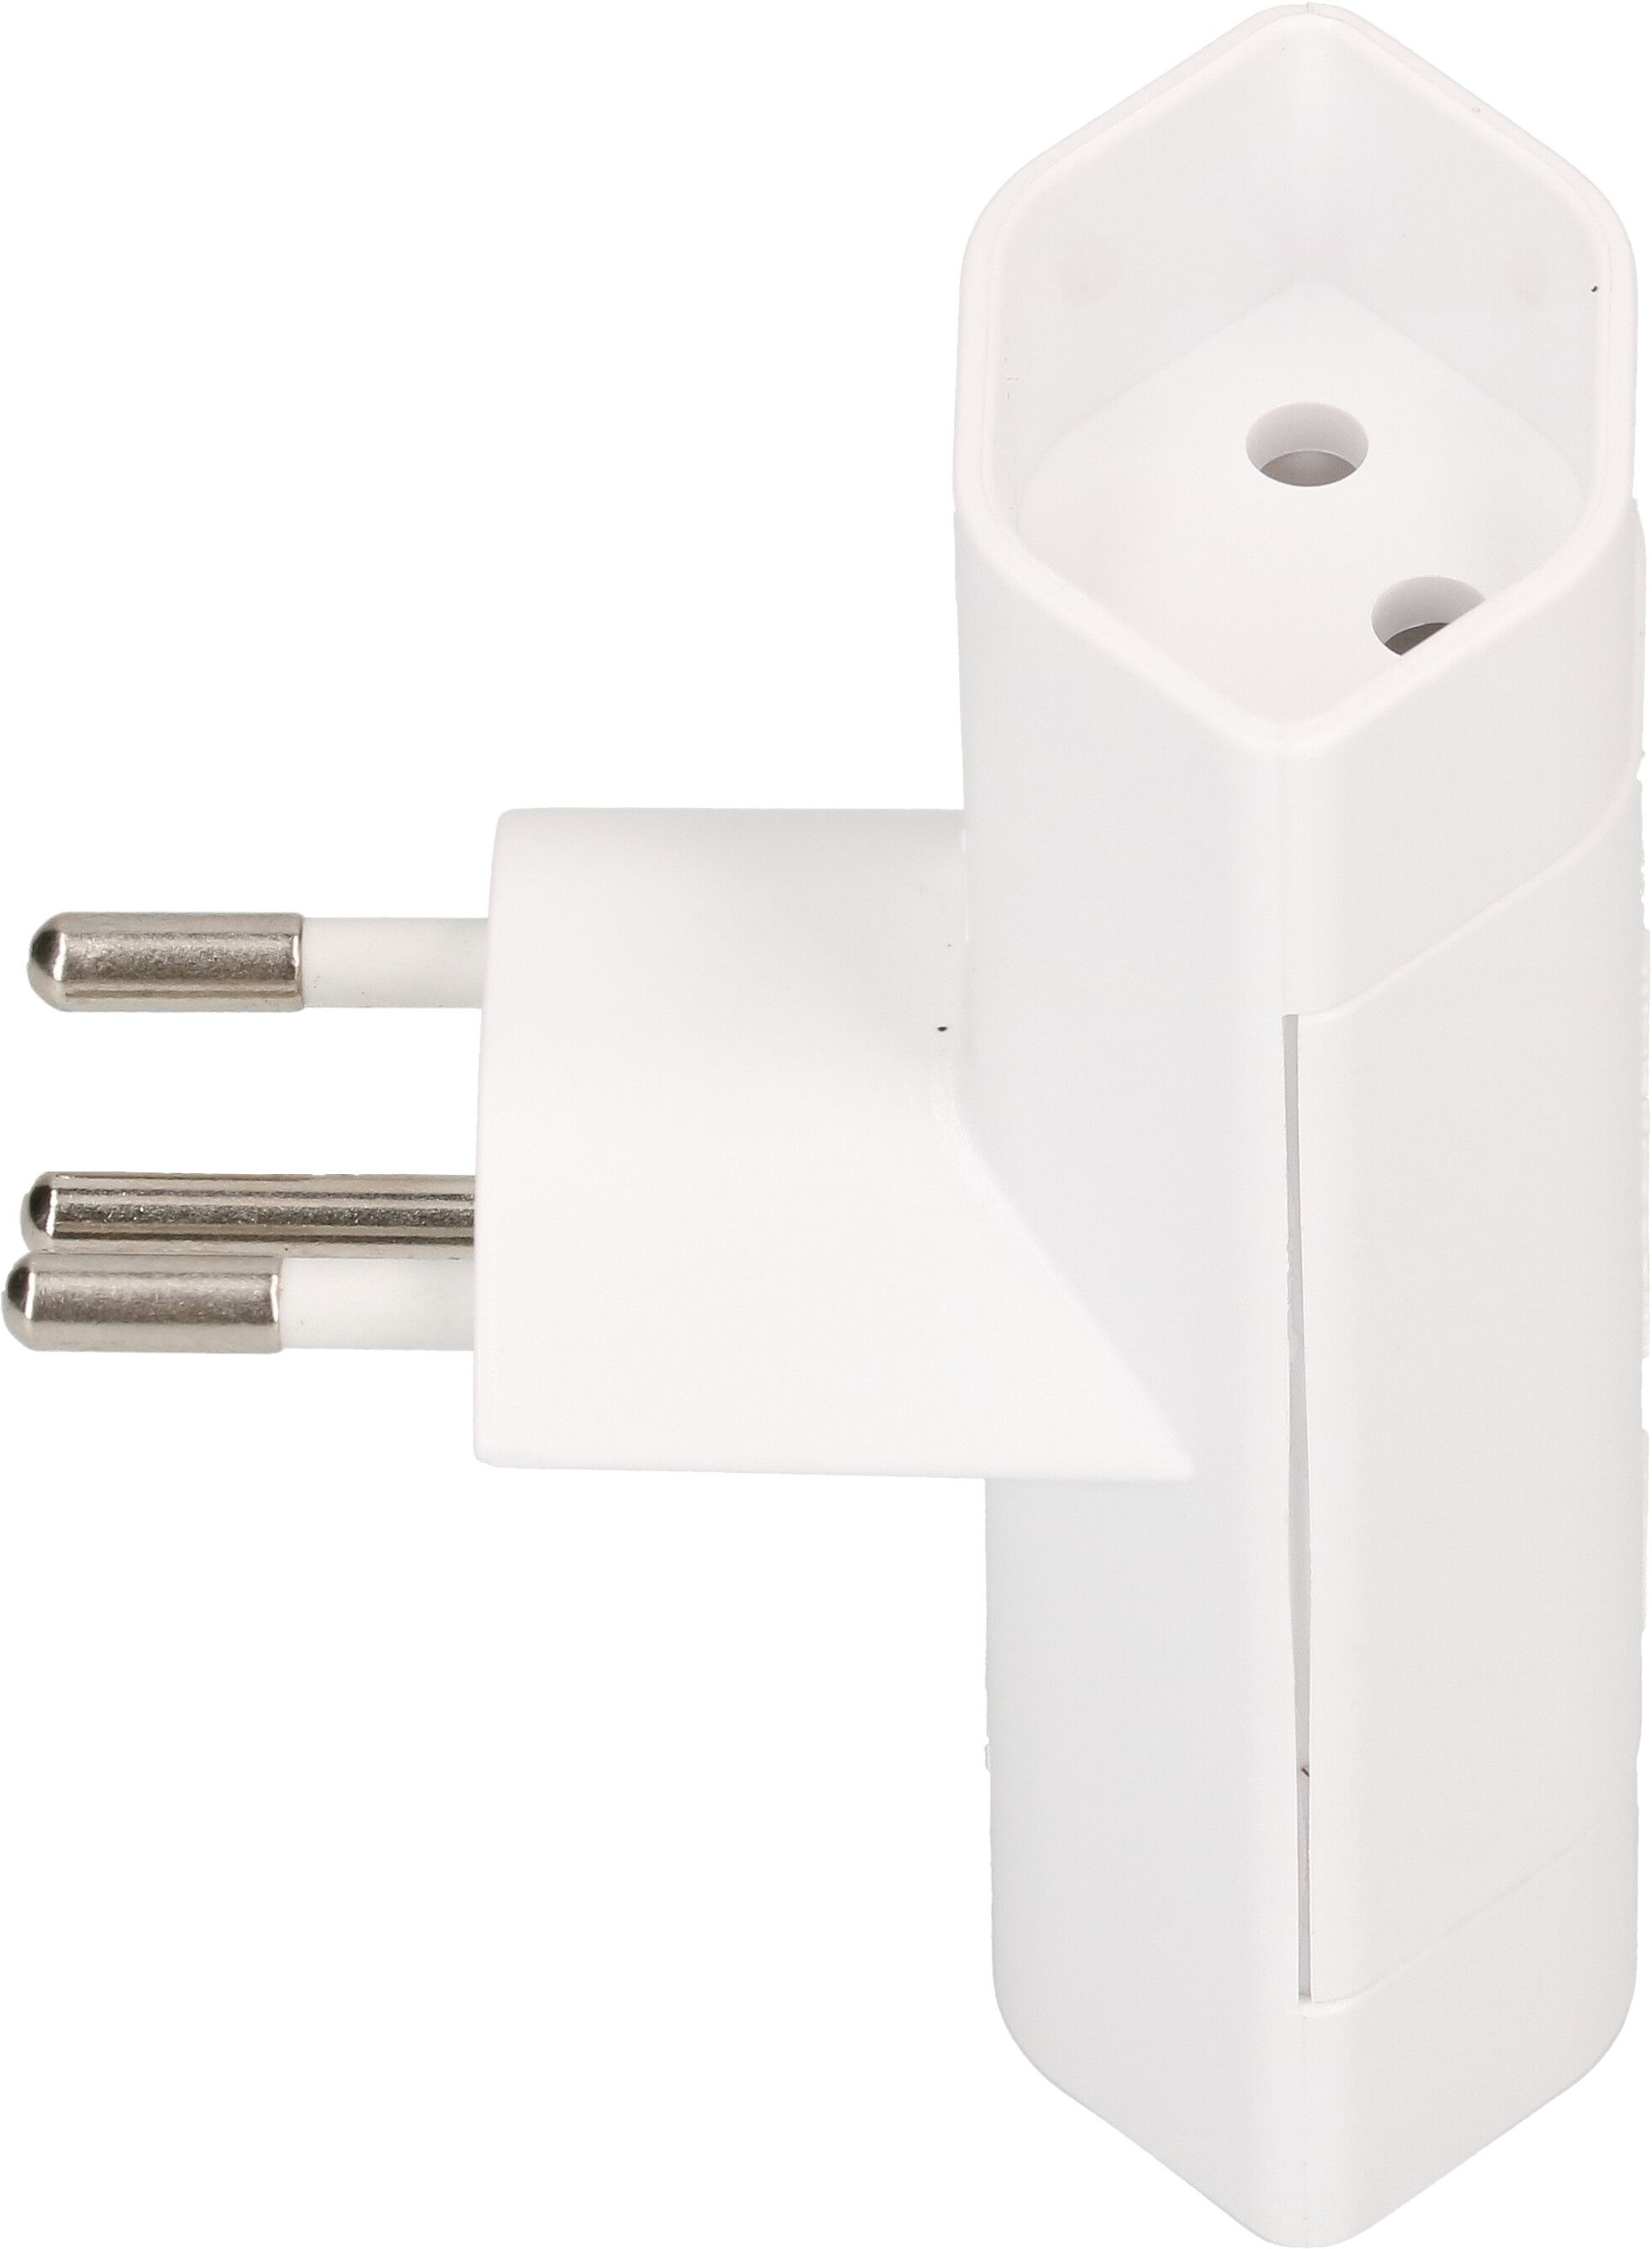 Adaptor T-shape 2x socket Swiss type 13 white